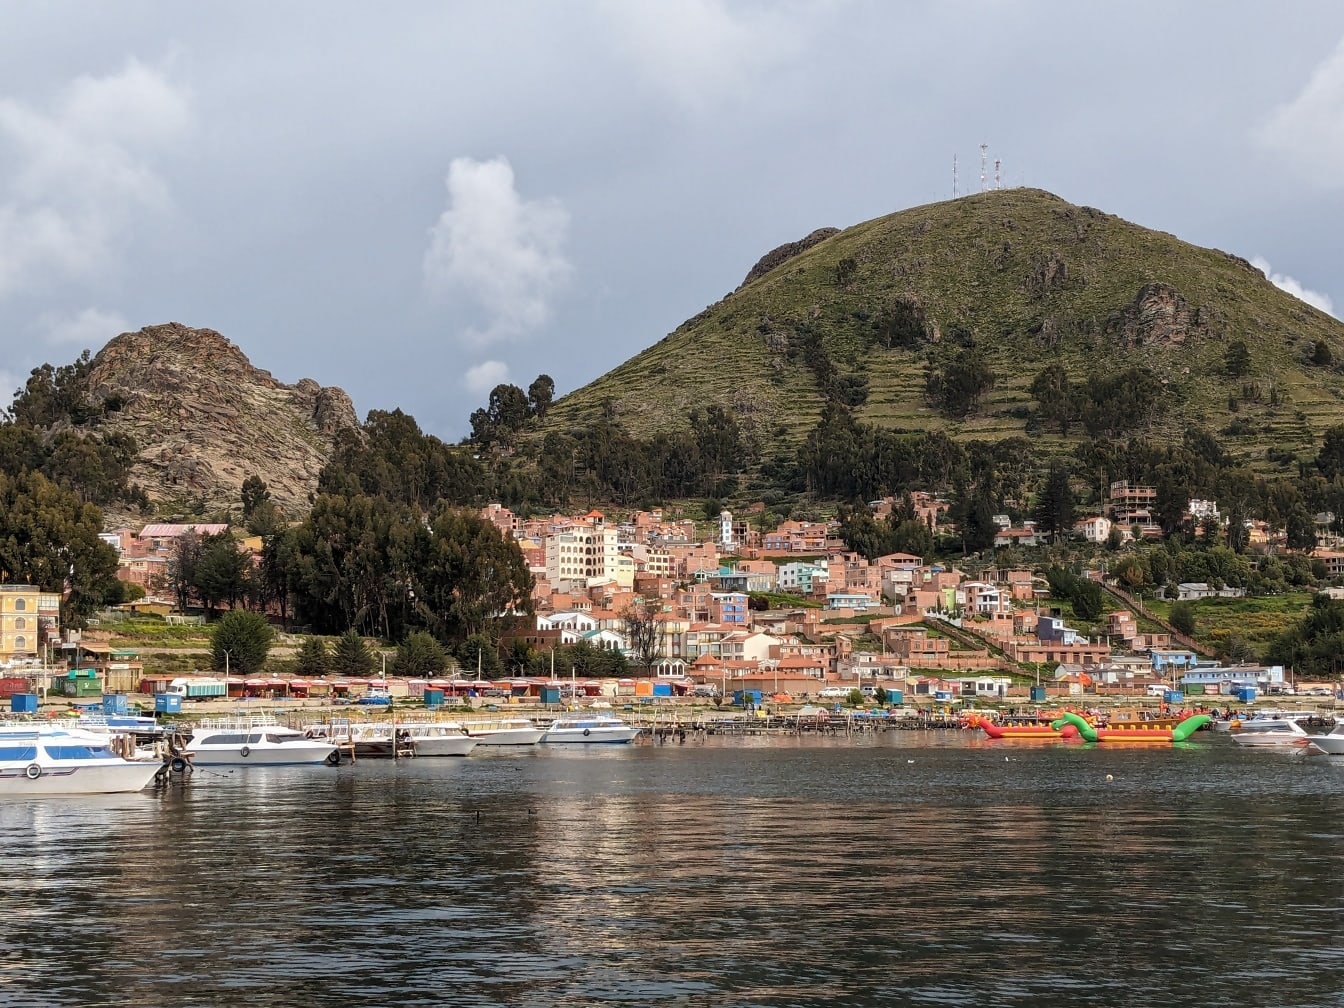 Panorama af turistmæssige Copacabana by ved Titicacasøen i Bolivia